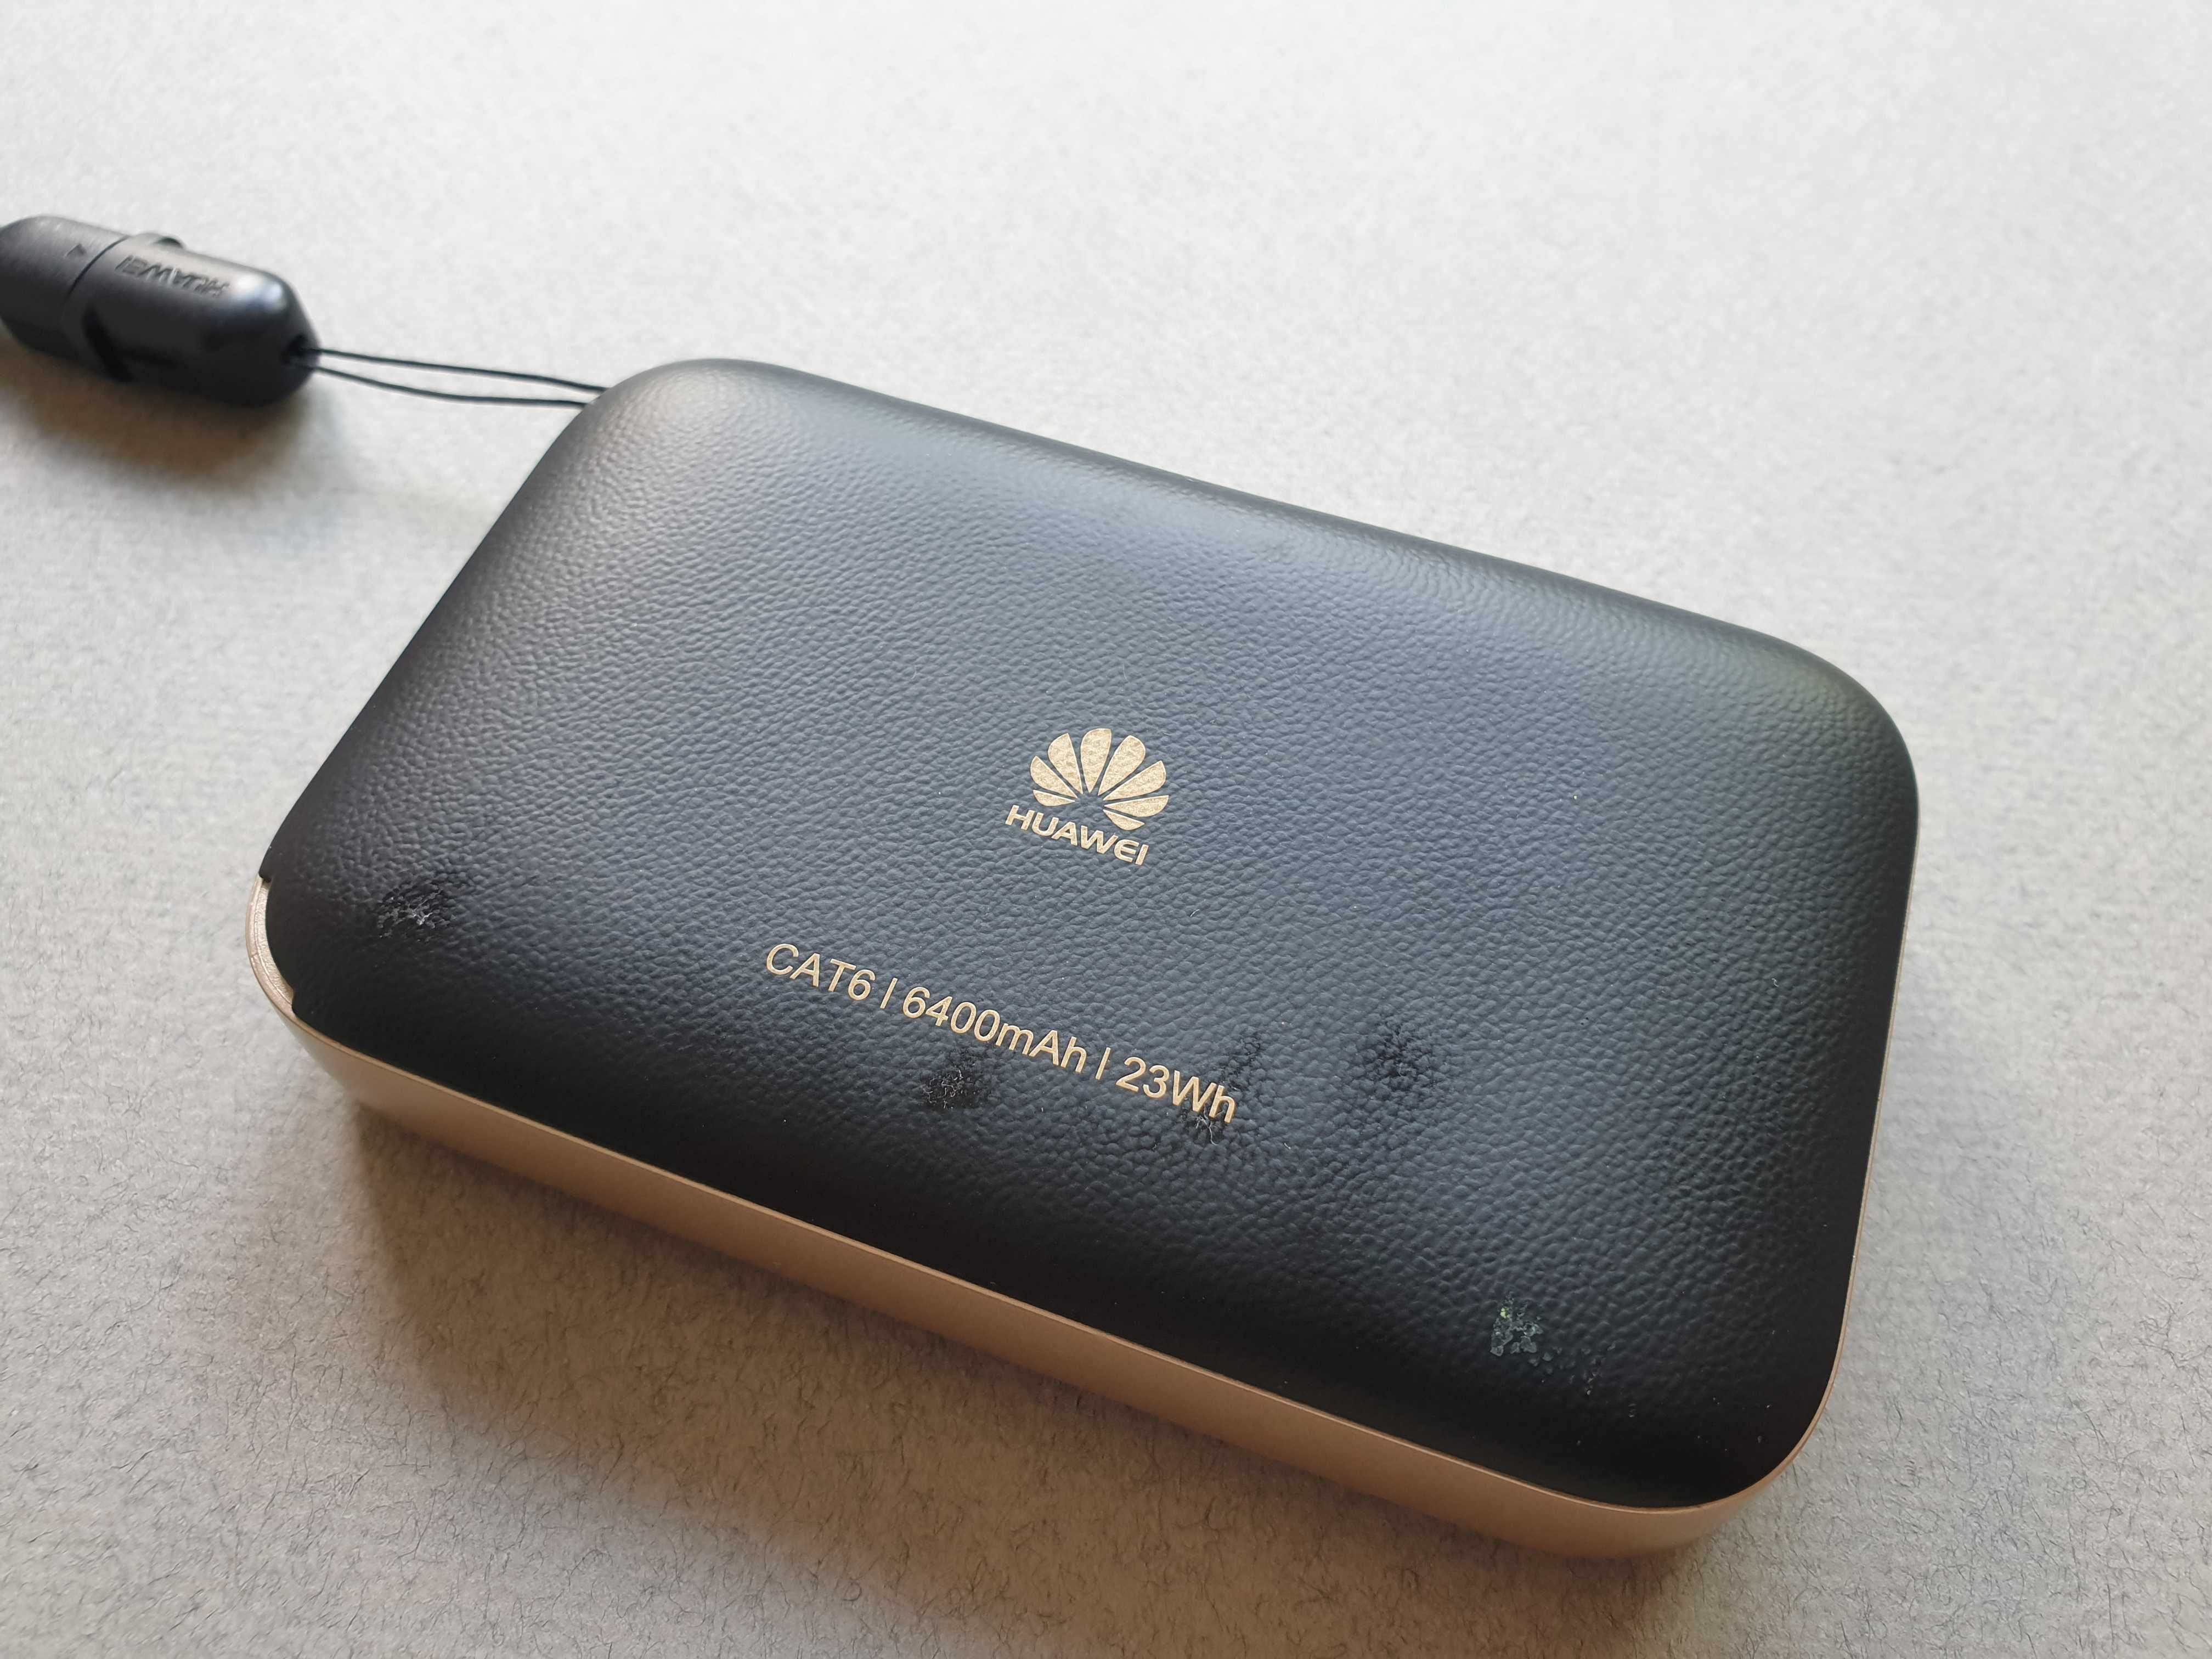 Huawei E5885 Мобильный WiFi роутер с 3G/4G модемом